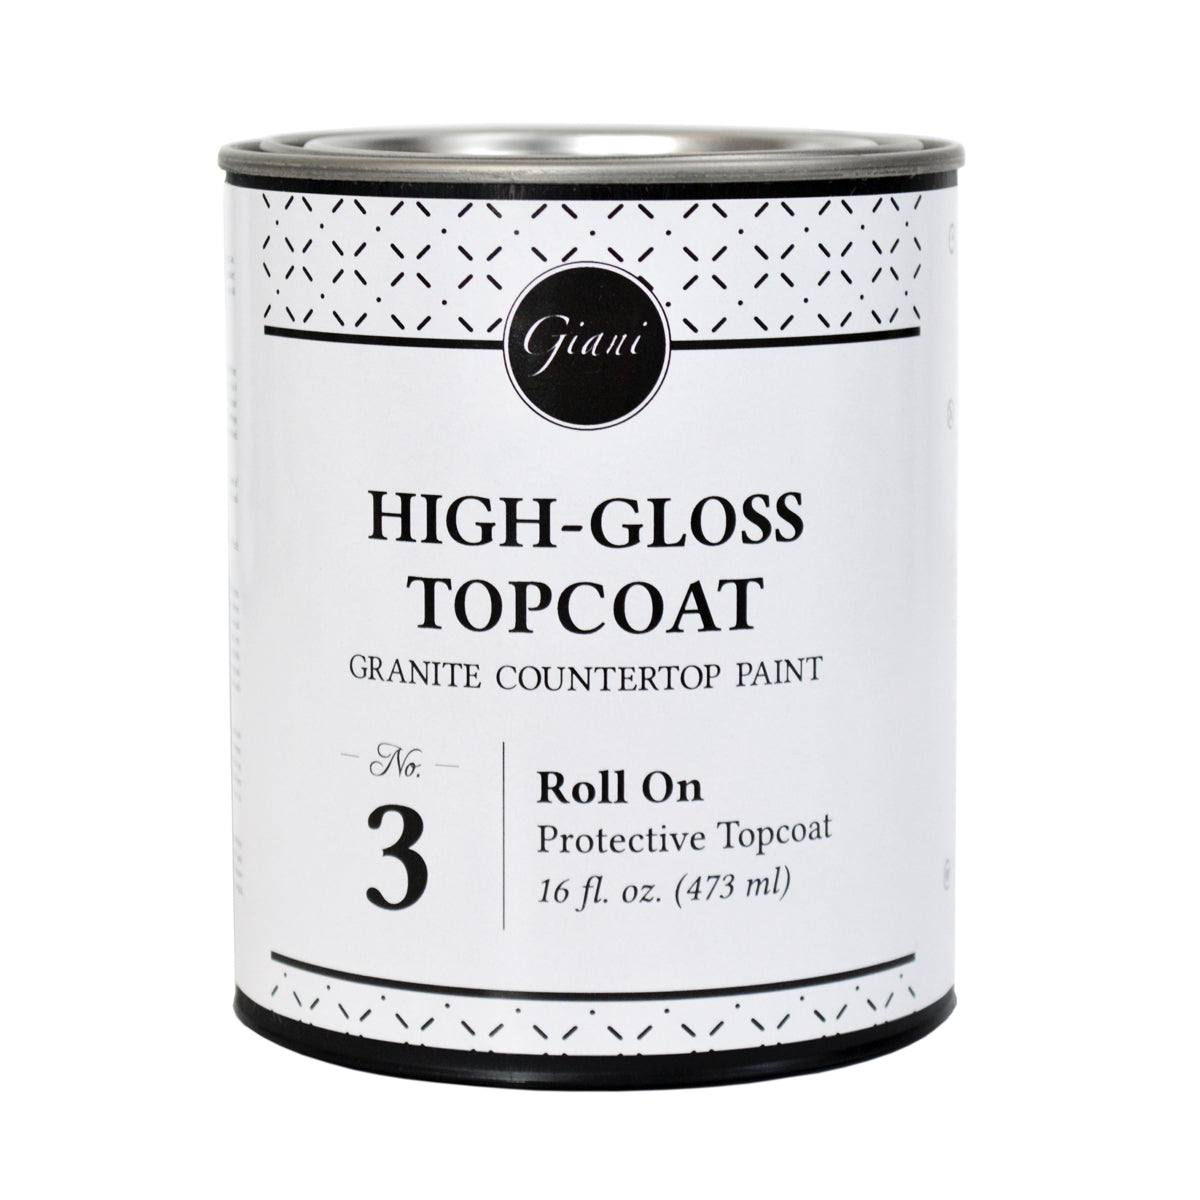 High Gloss Topcoat For Giani Countertop Paint Kits Step 3 Giani Inc